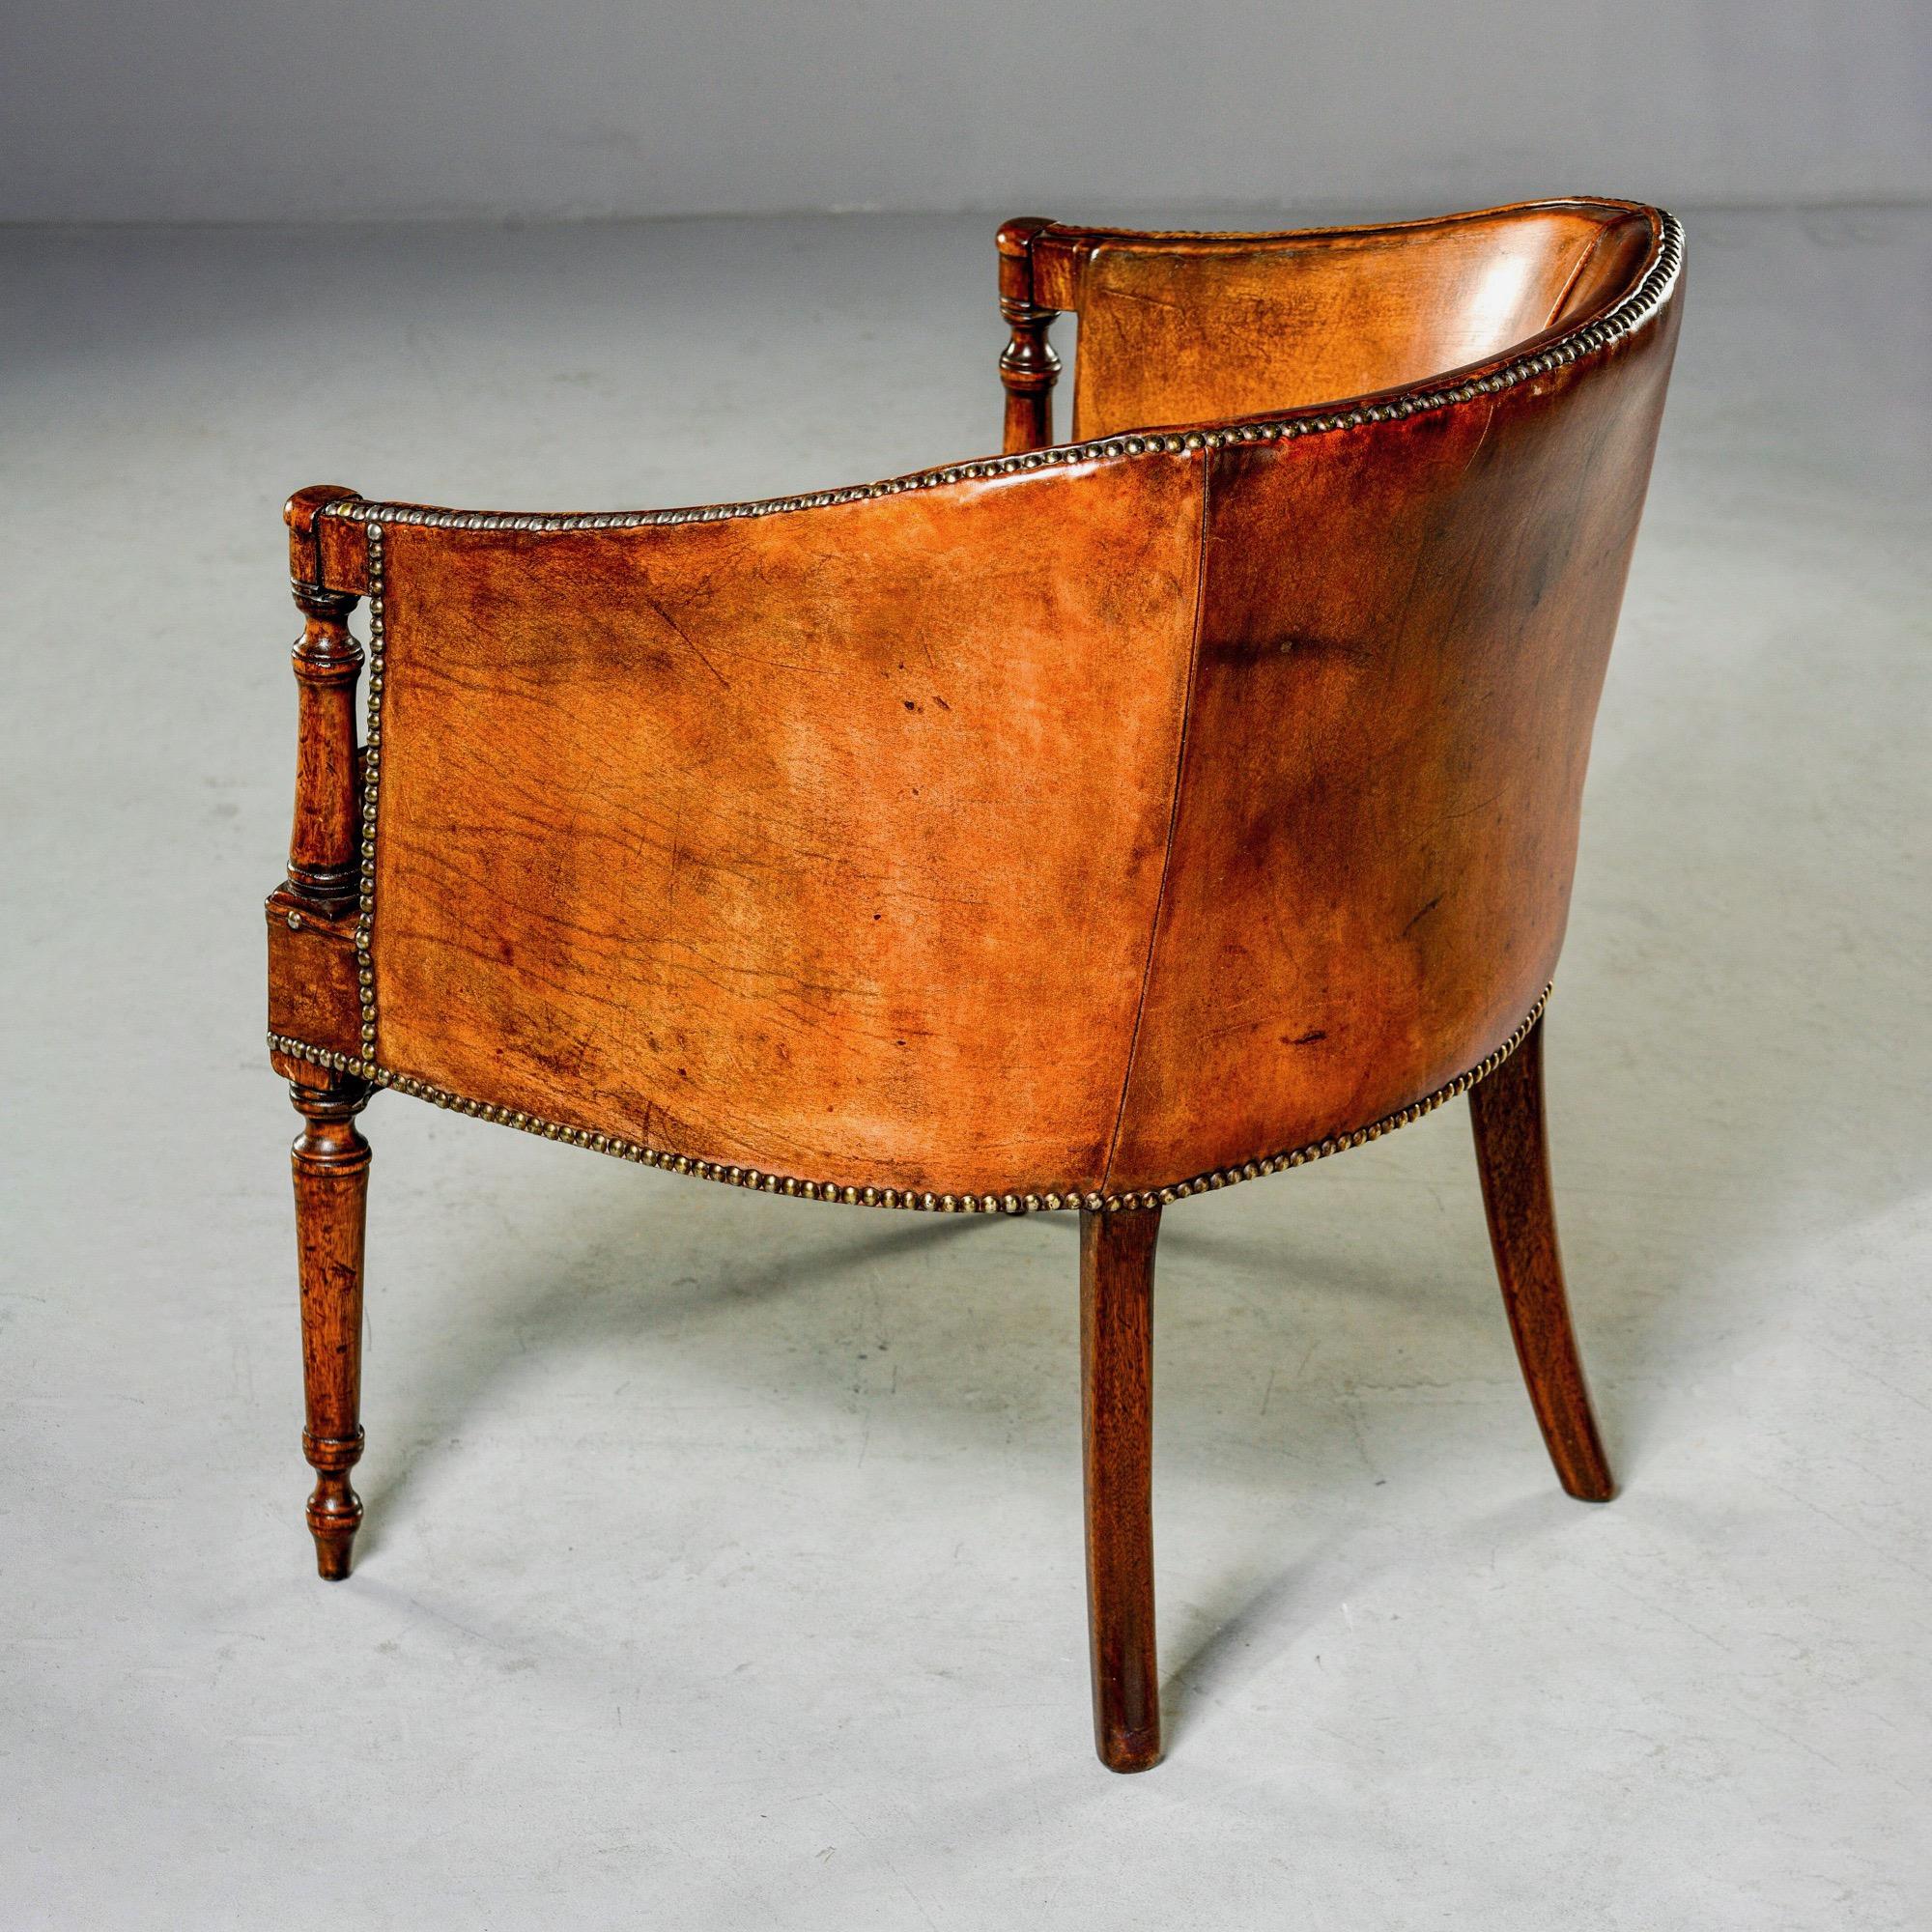 20th Century English Mahogany Barrel Back Chair in Original Leather